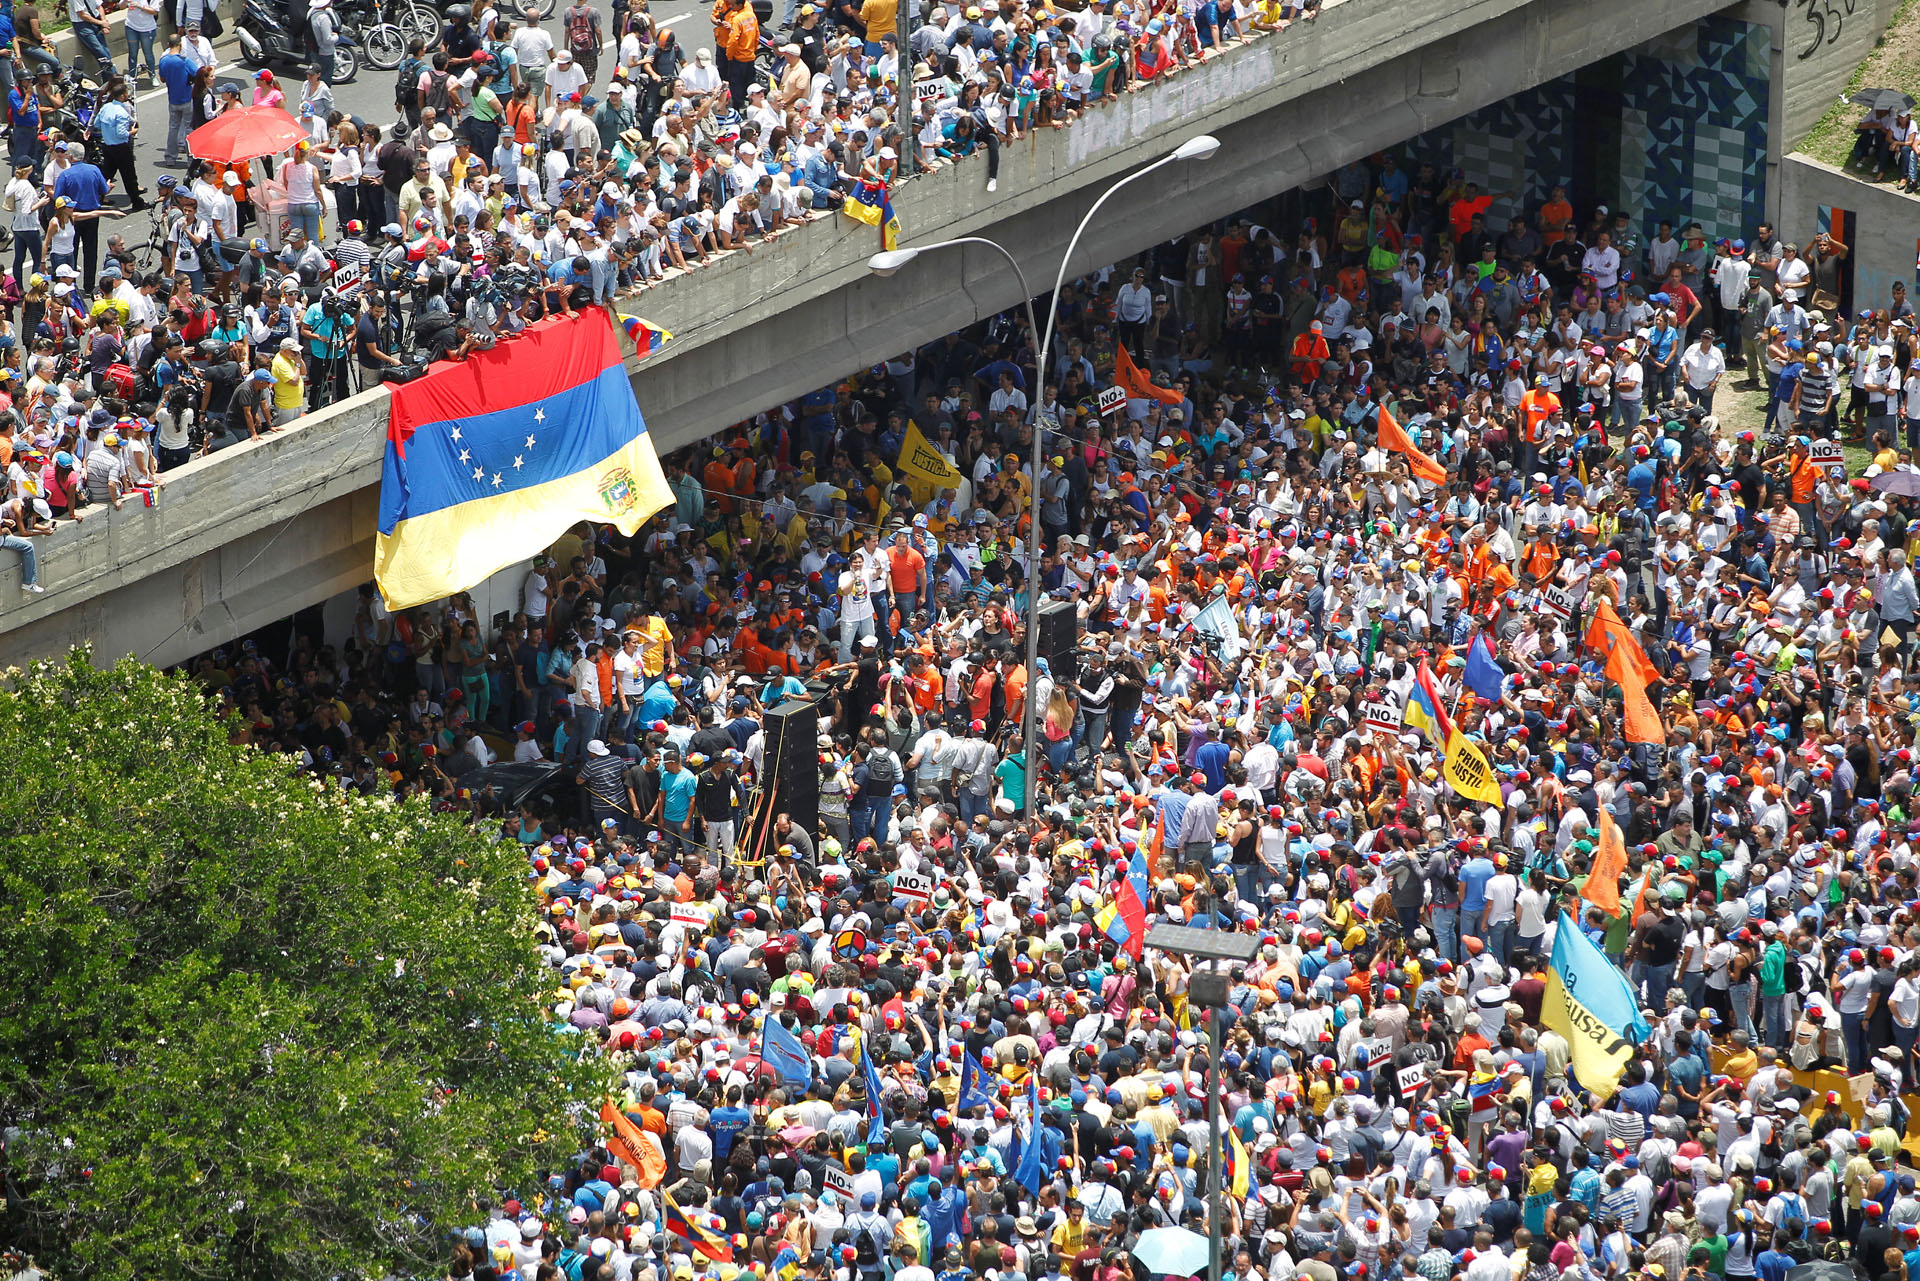 A general view shows an opposition rally in Caracas, Venezuela April 6, 2017. REUTERS/Christian Veron